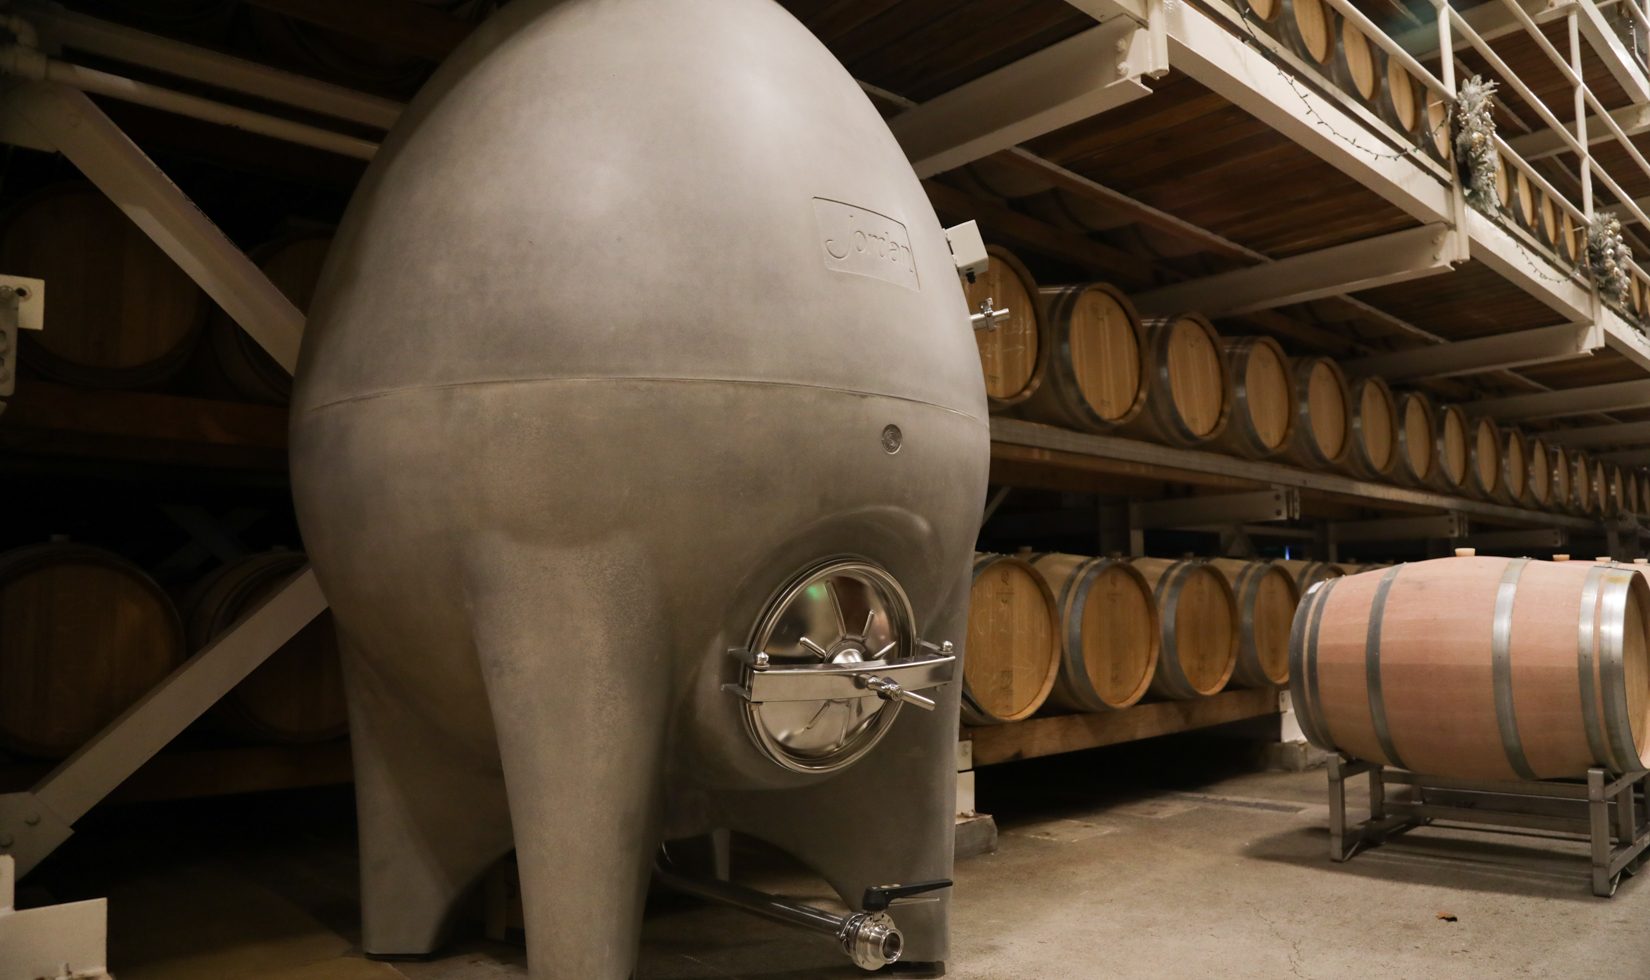 concrete egg vessel in winery barrel room